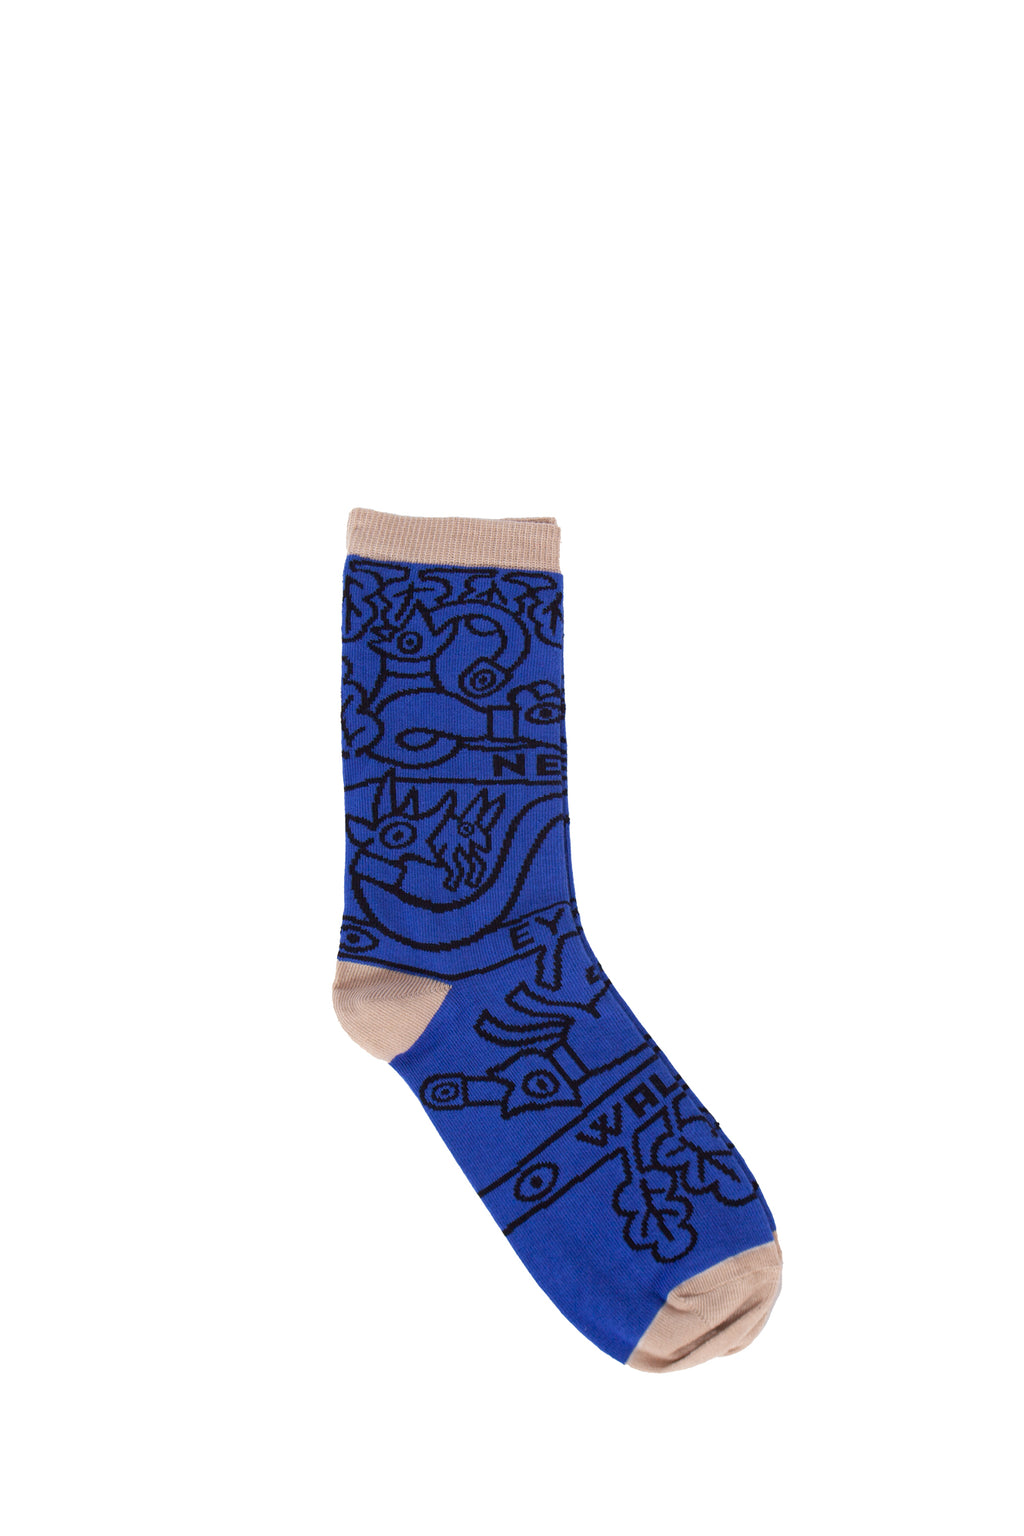 NEW EYES Socks - Blue